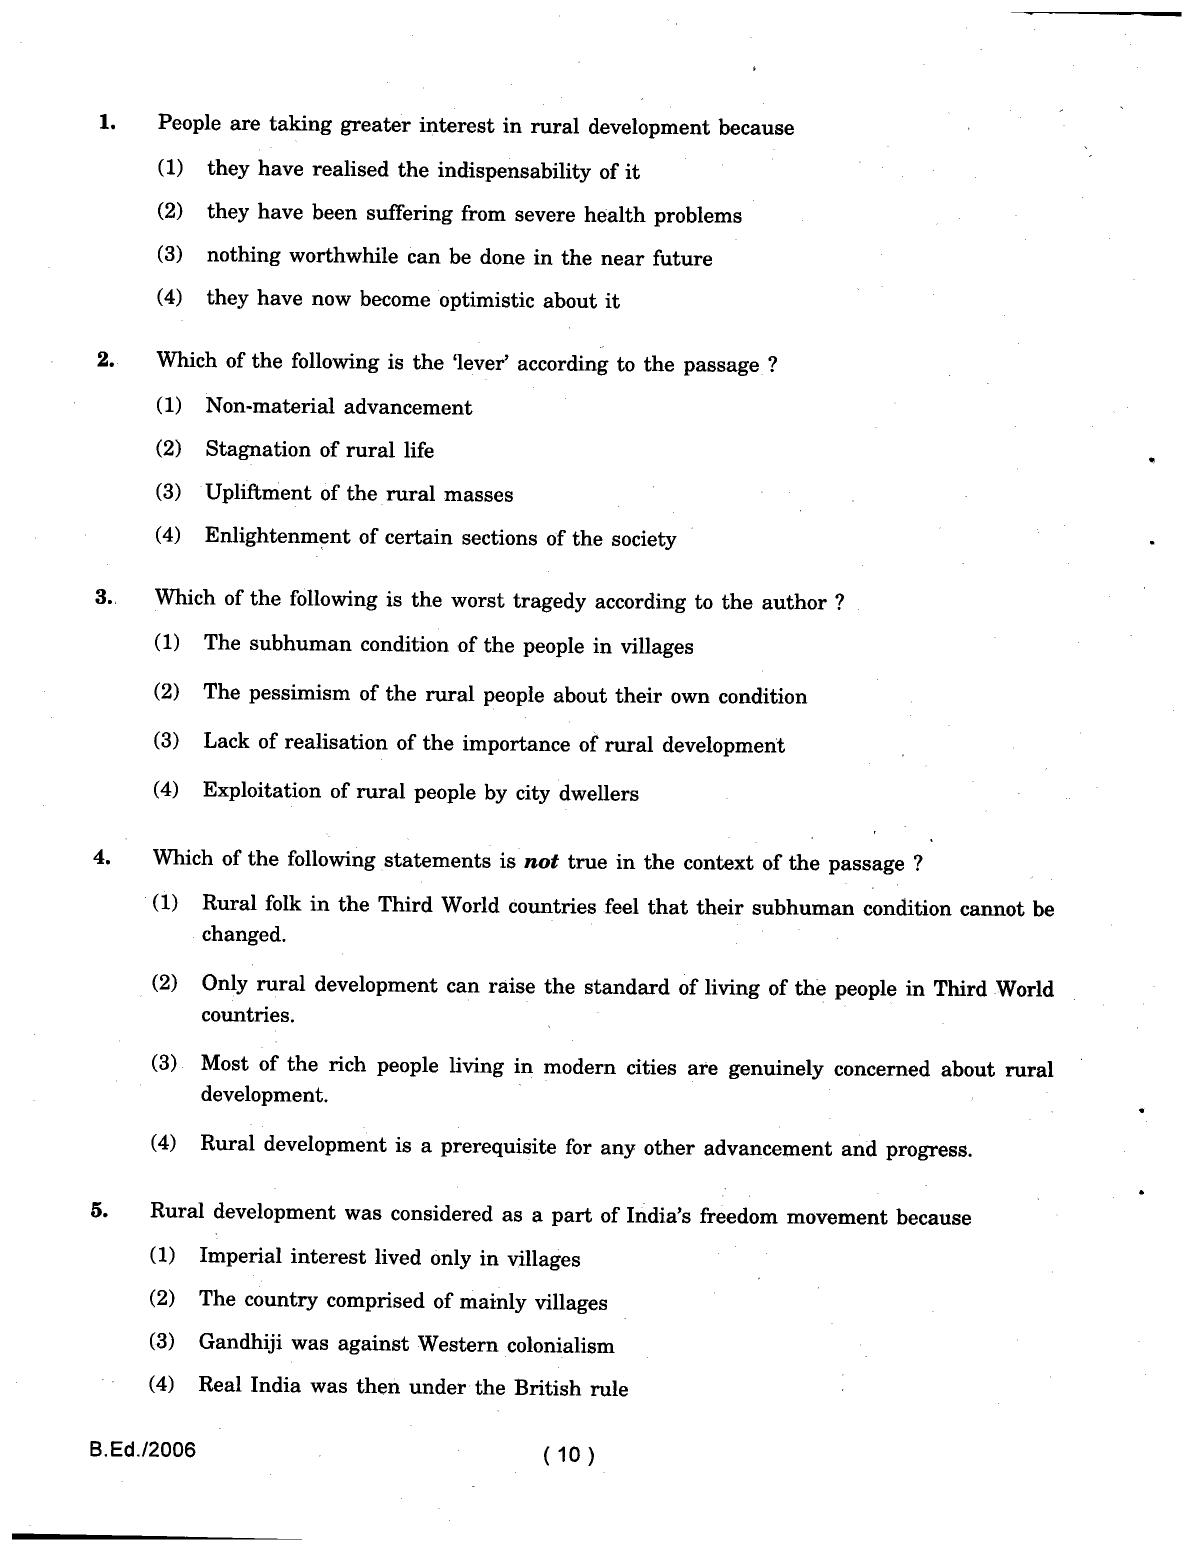 IGNOU B.Ed 2006 Question Paper - Page 10